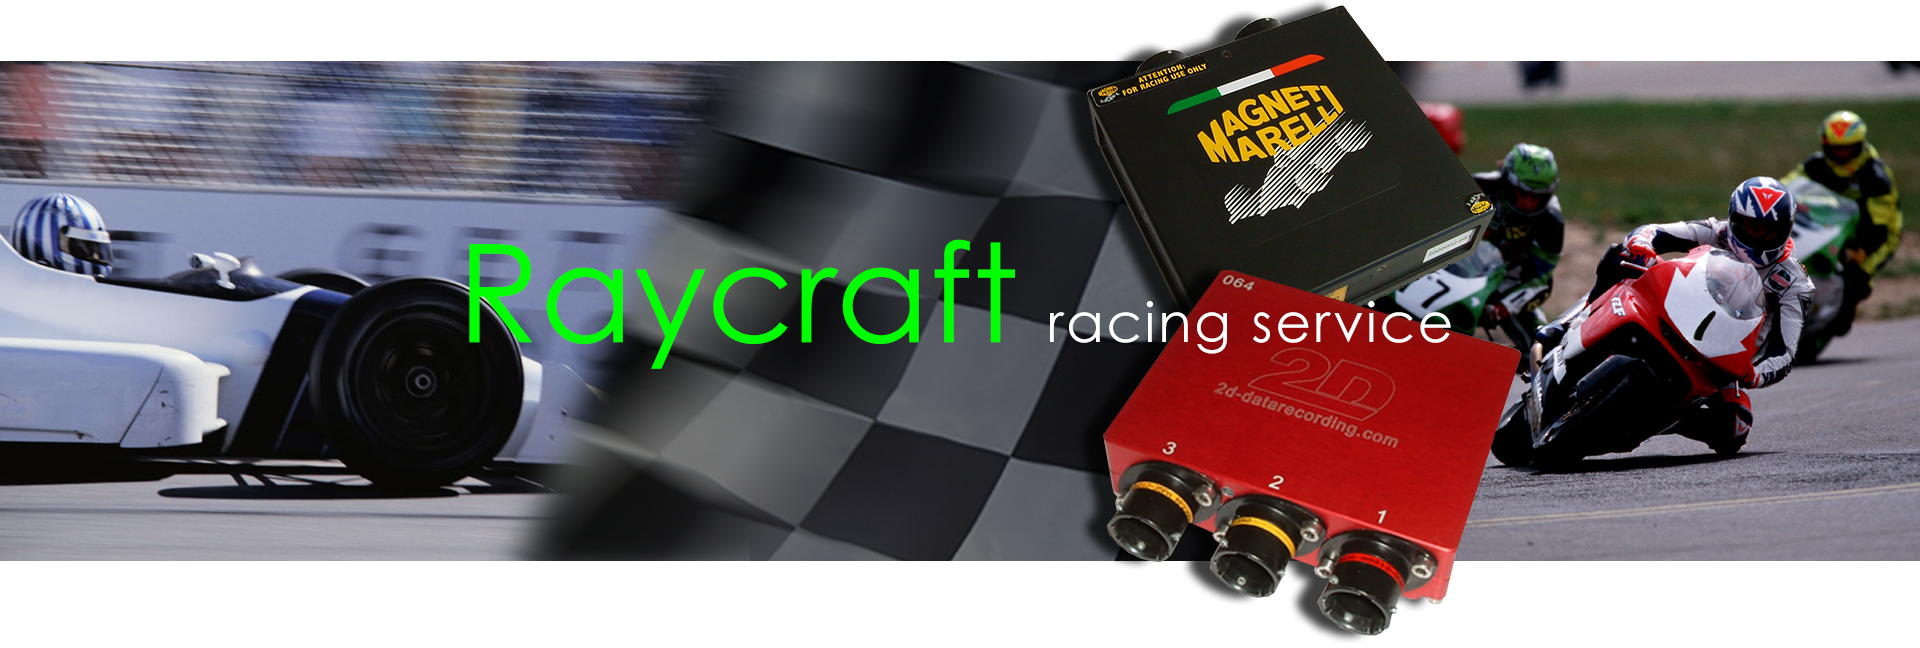 Raycraft racing service